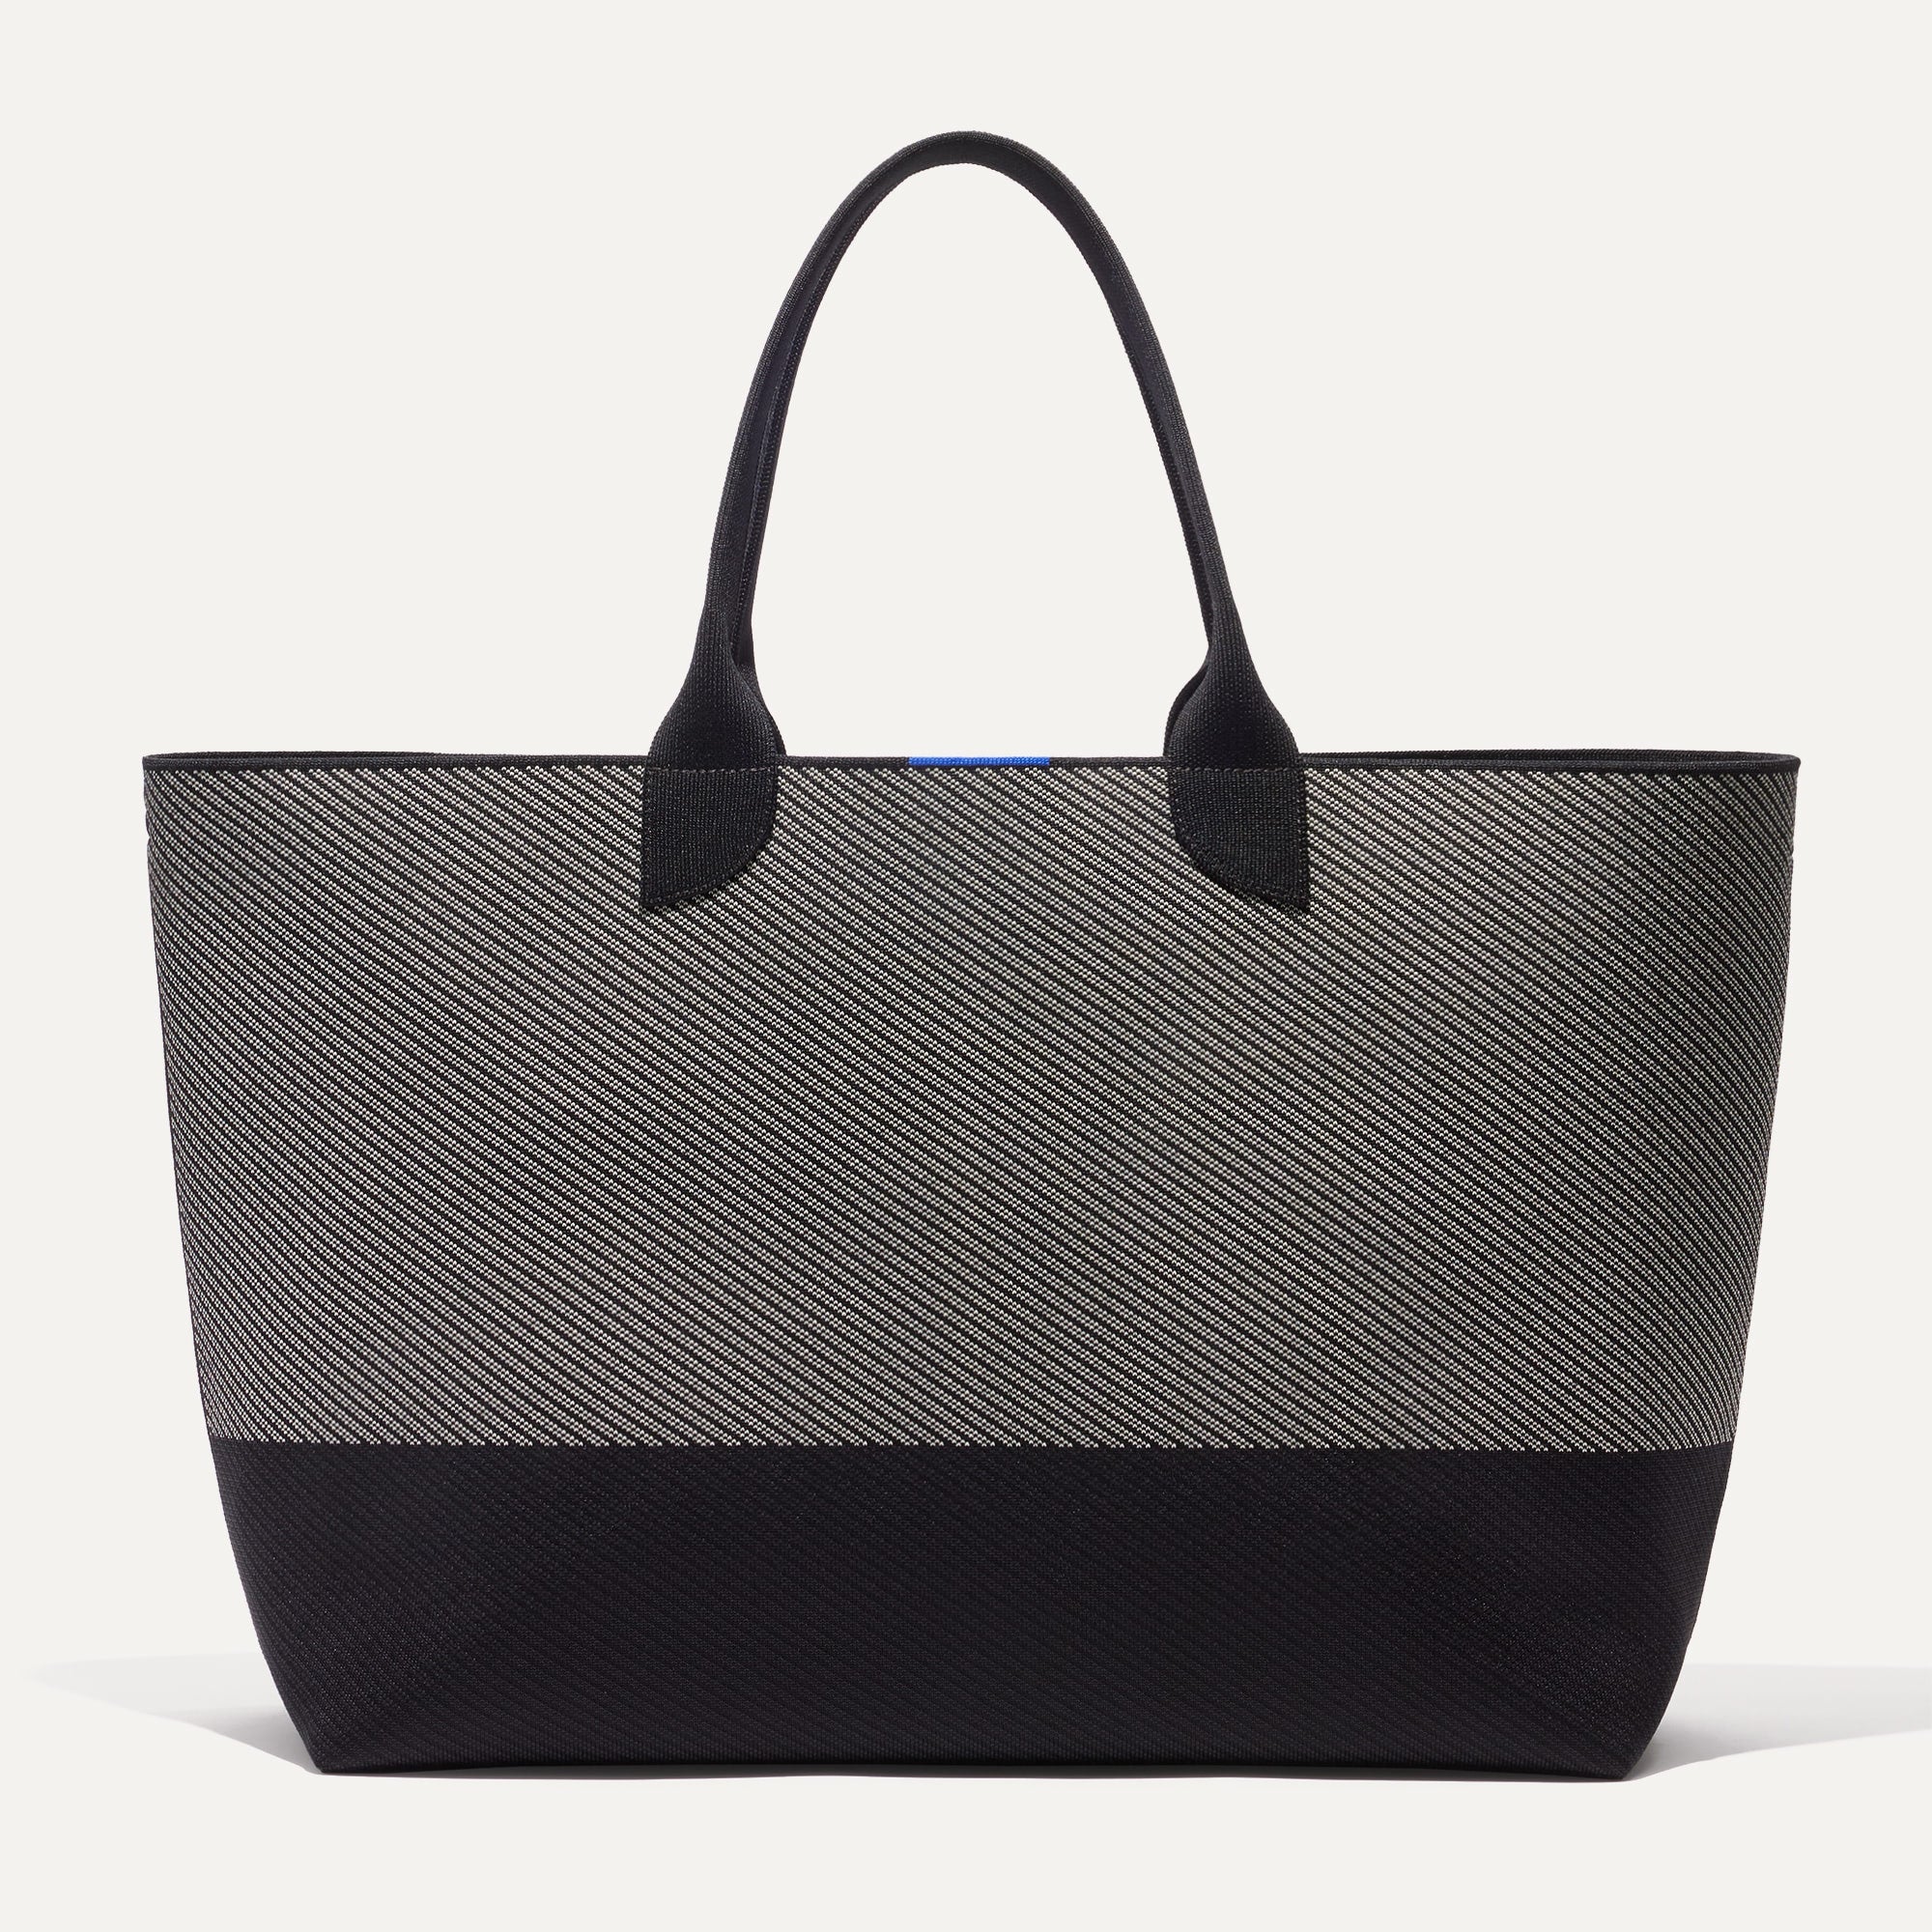 M light gray shopper bag